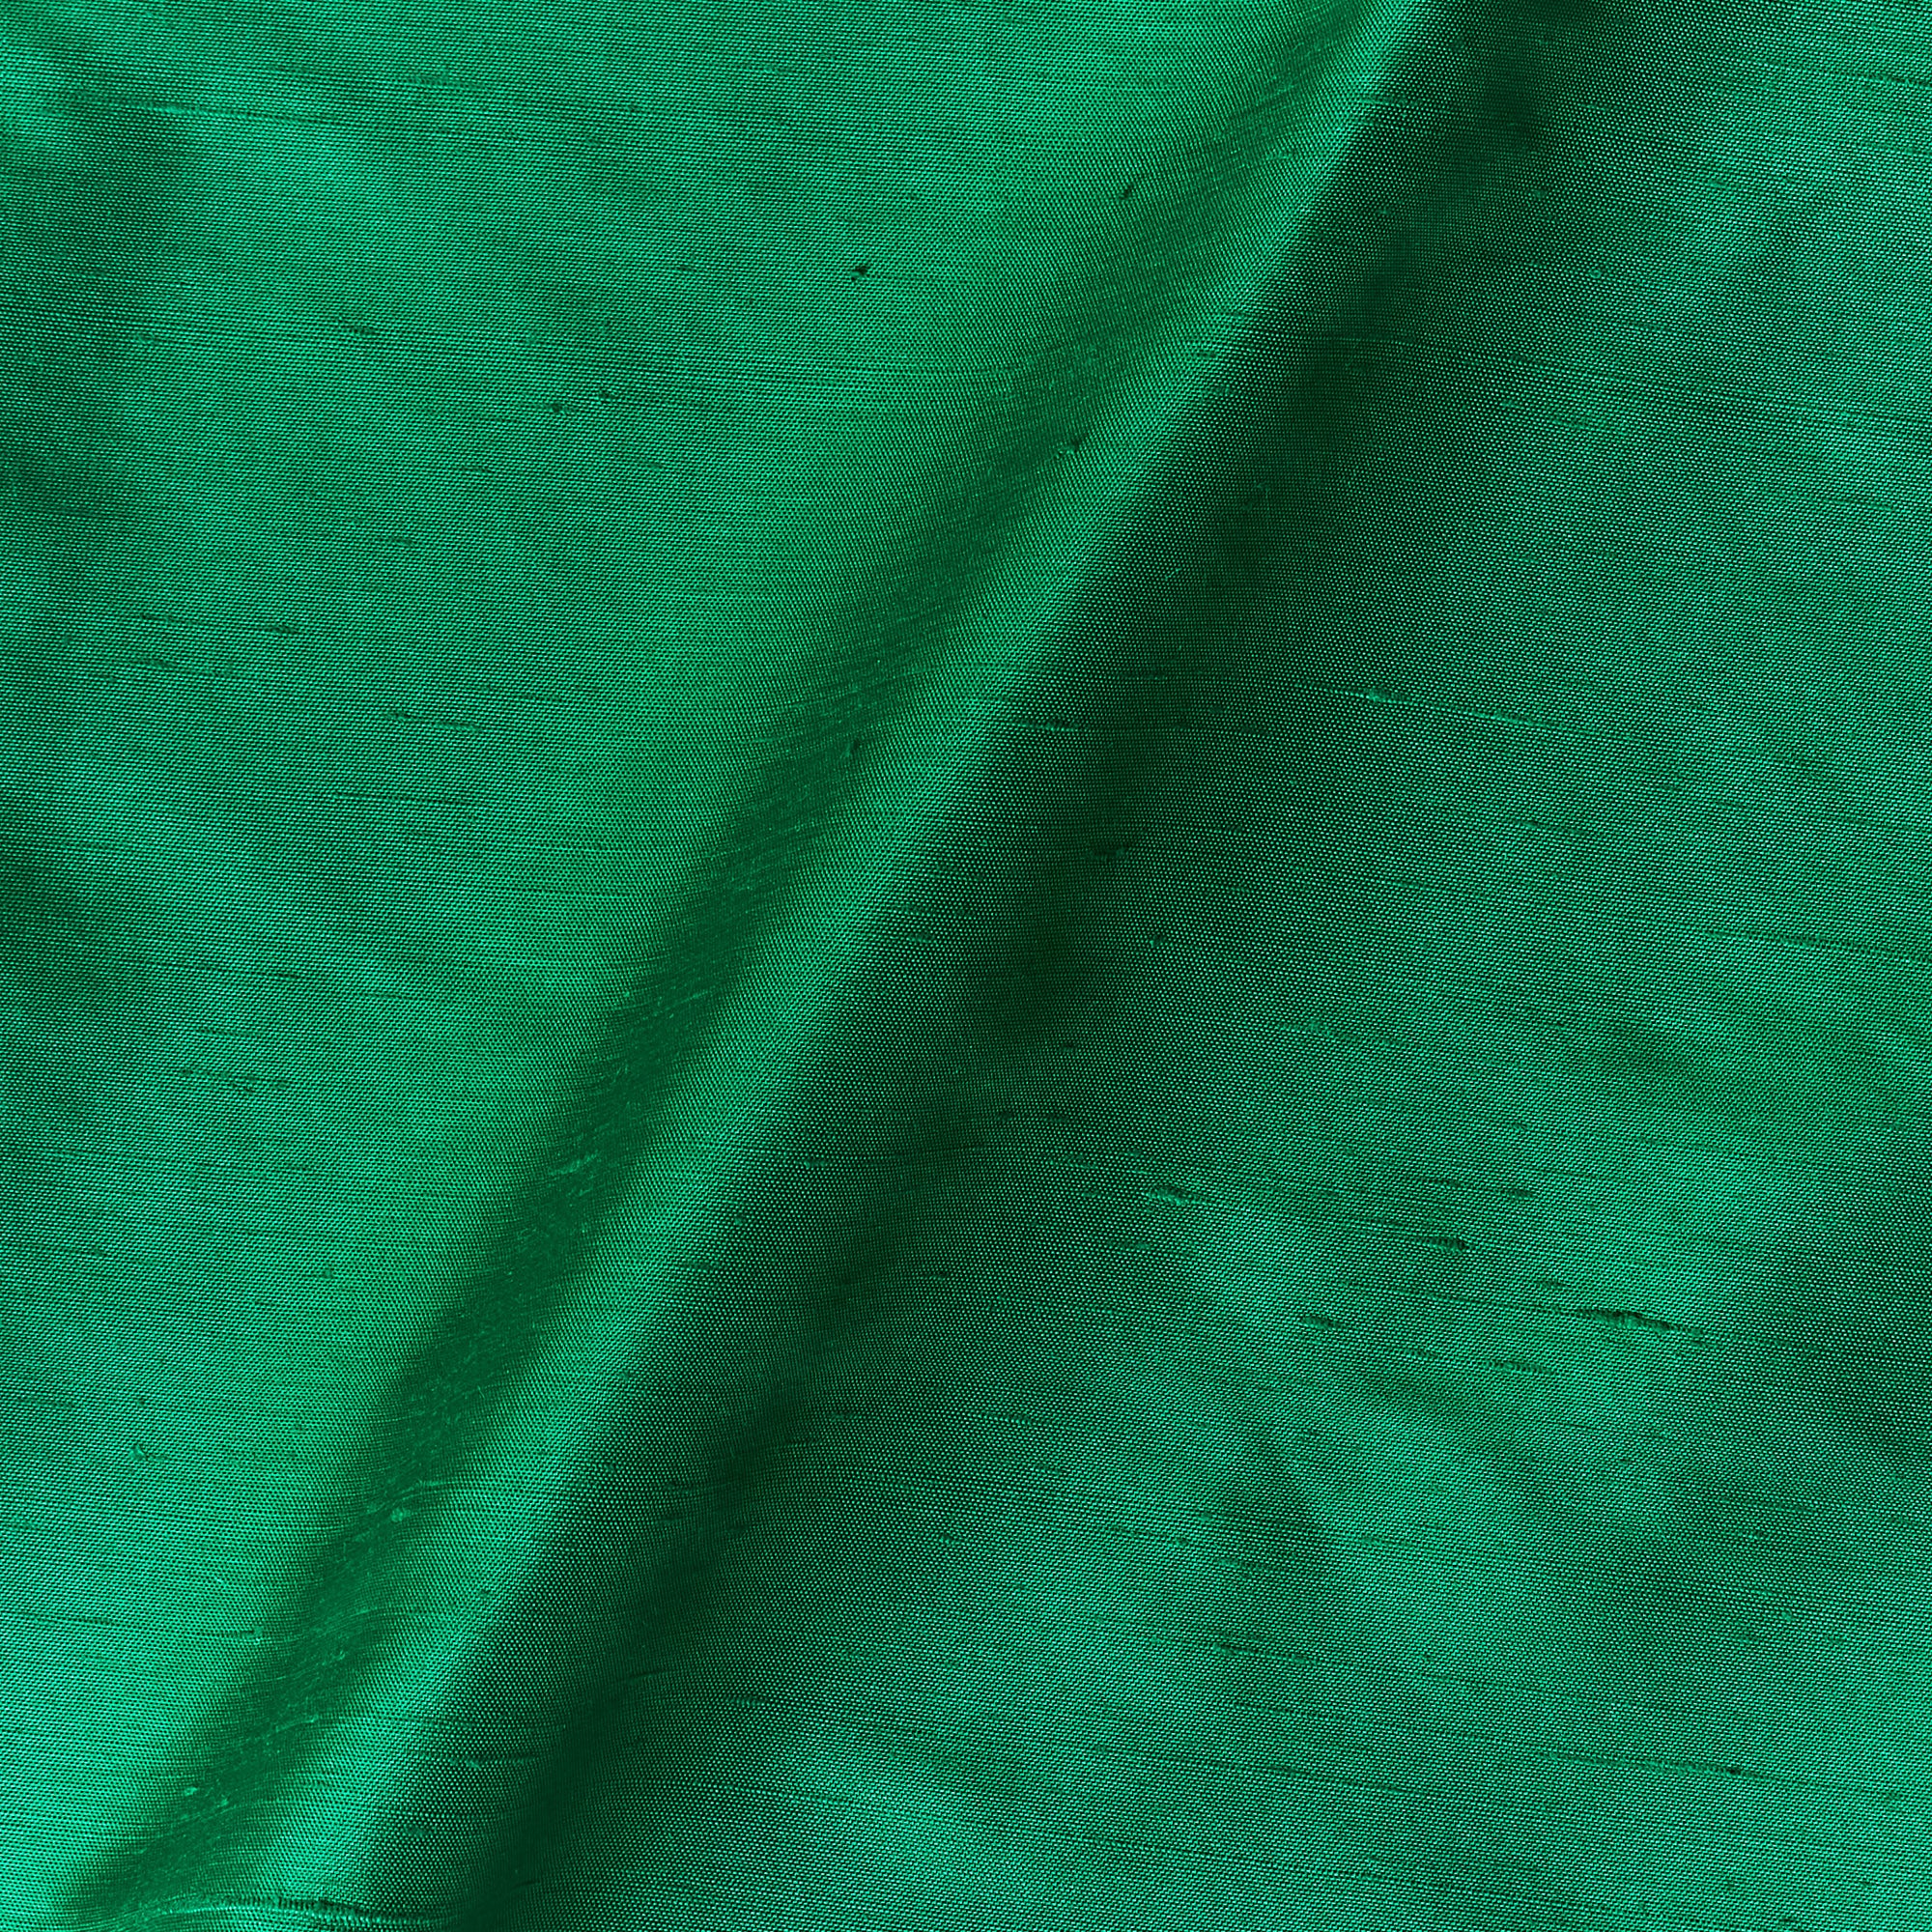 Displaying Bohai Dupion pure silk in an emerald shade with moderate drape